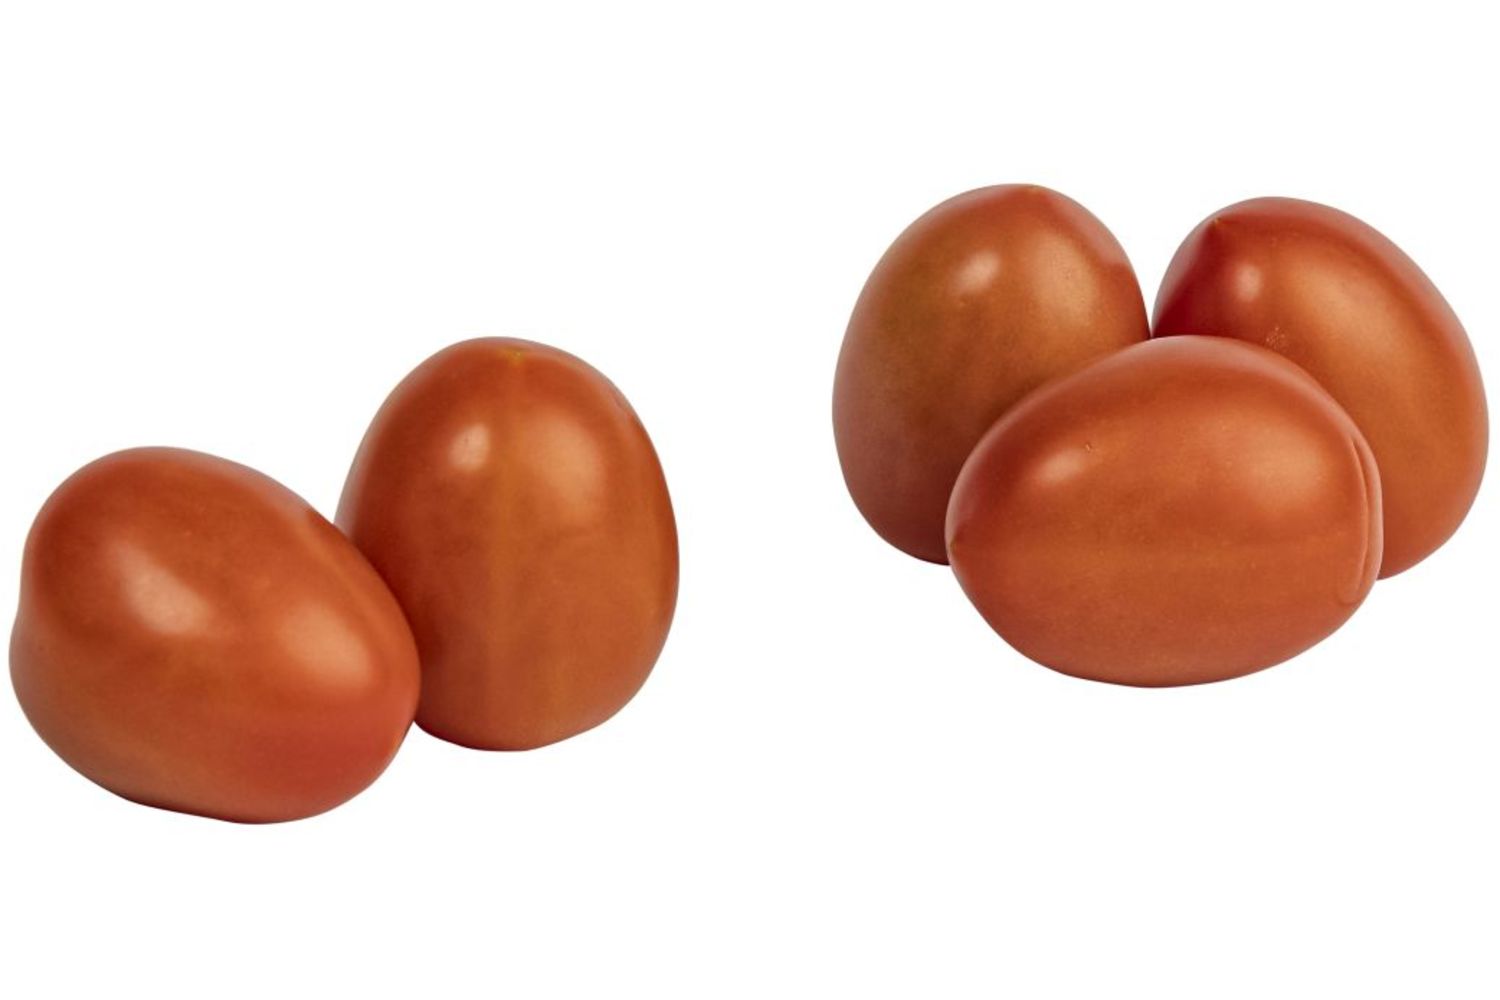 Pomodori tomaat verpakt 750gr kist 9 stuks 1